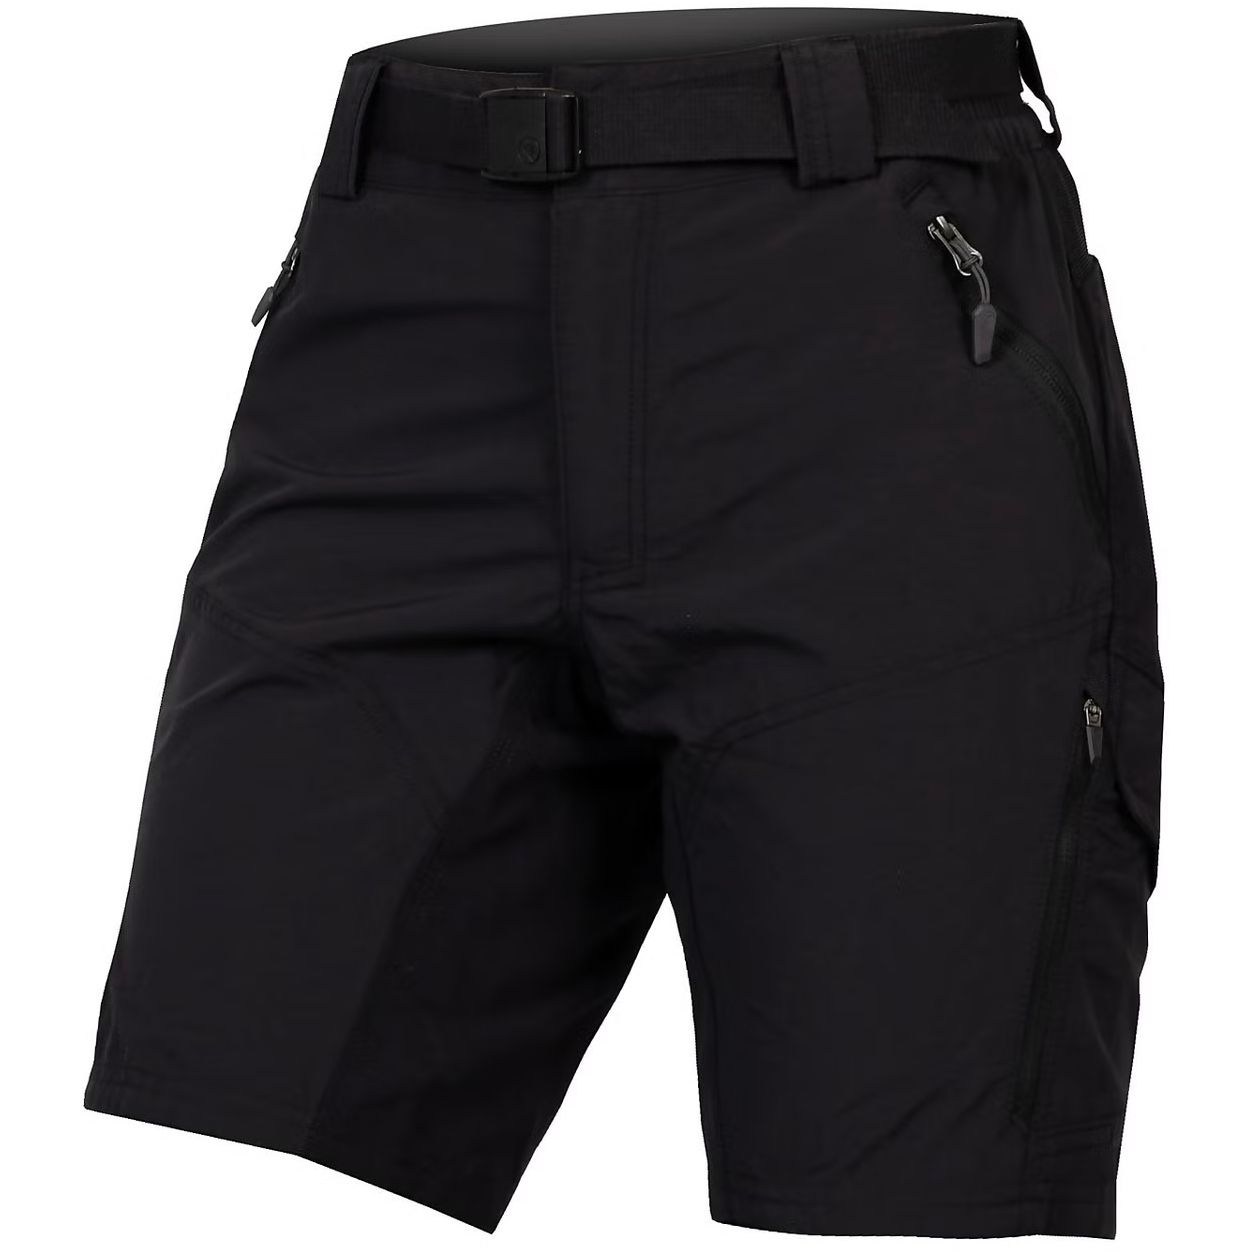 Productfoto van Endura Hummvee Shorts Dames - zwart